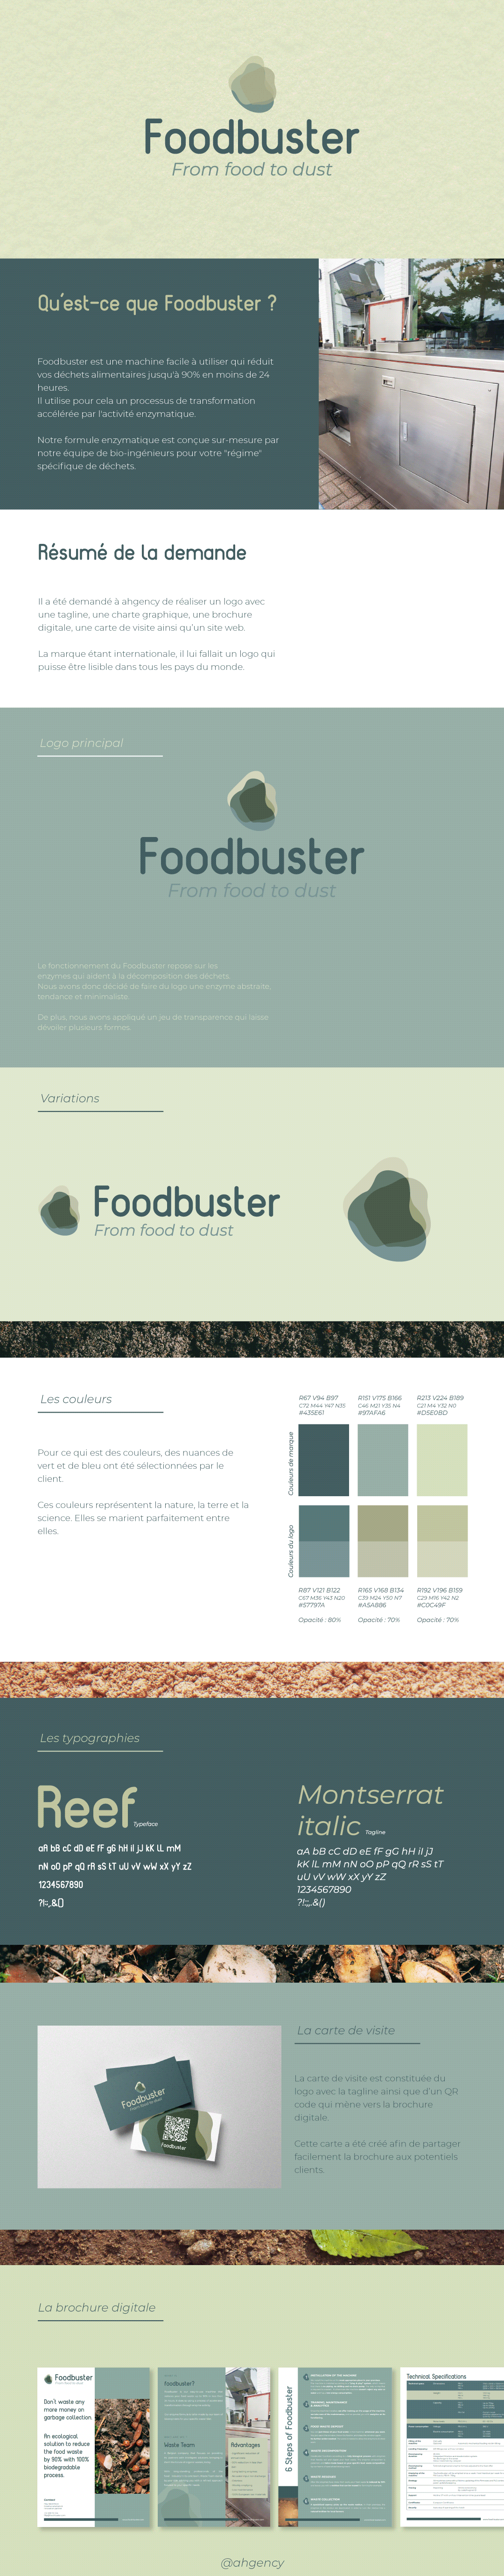 b2b belgium branding  brochure carte de visite ecologie Foodwaste identité visuelle logo Website